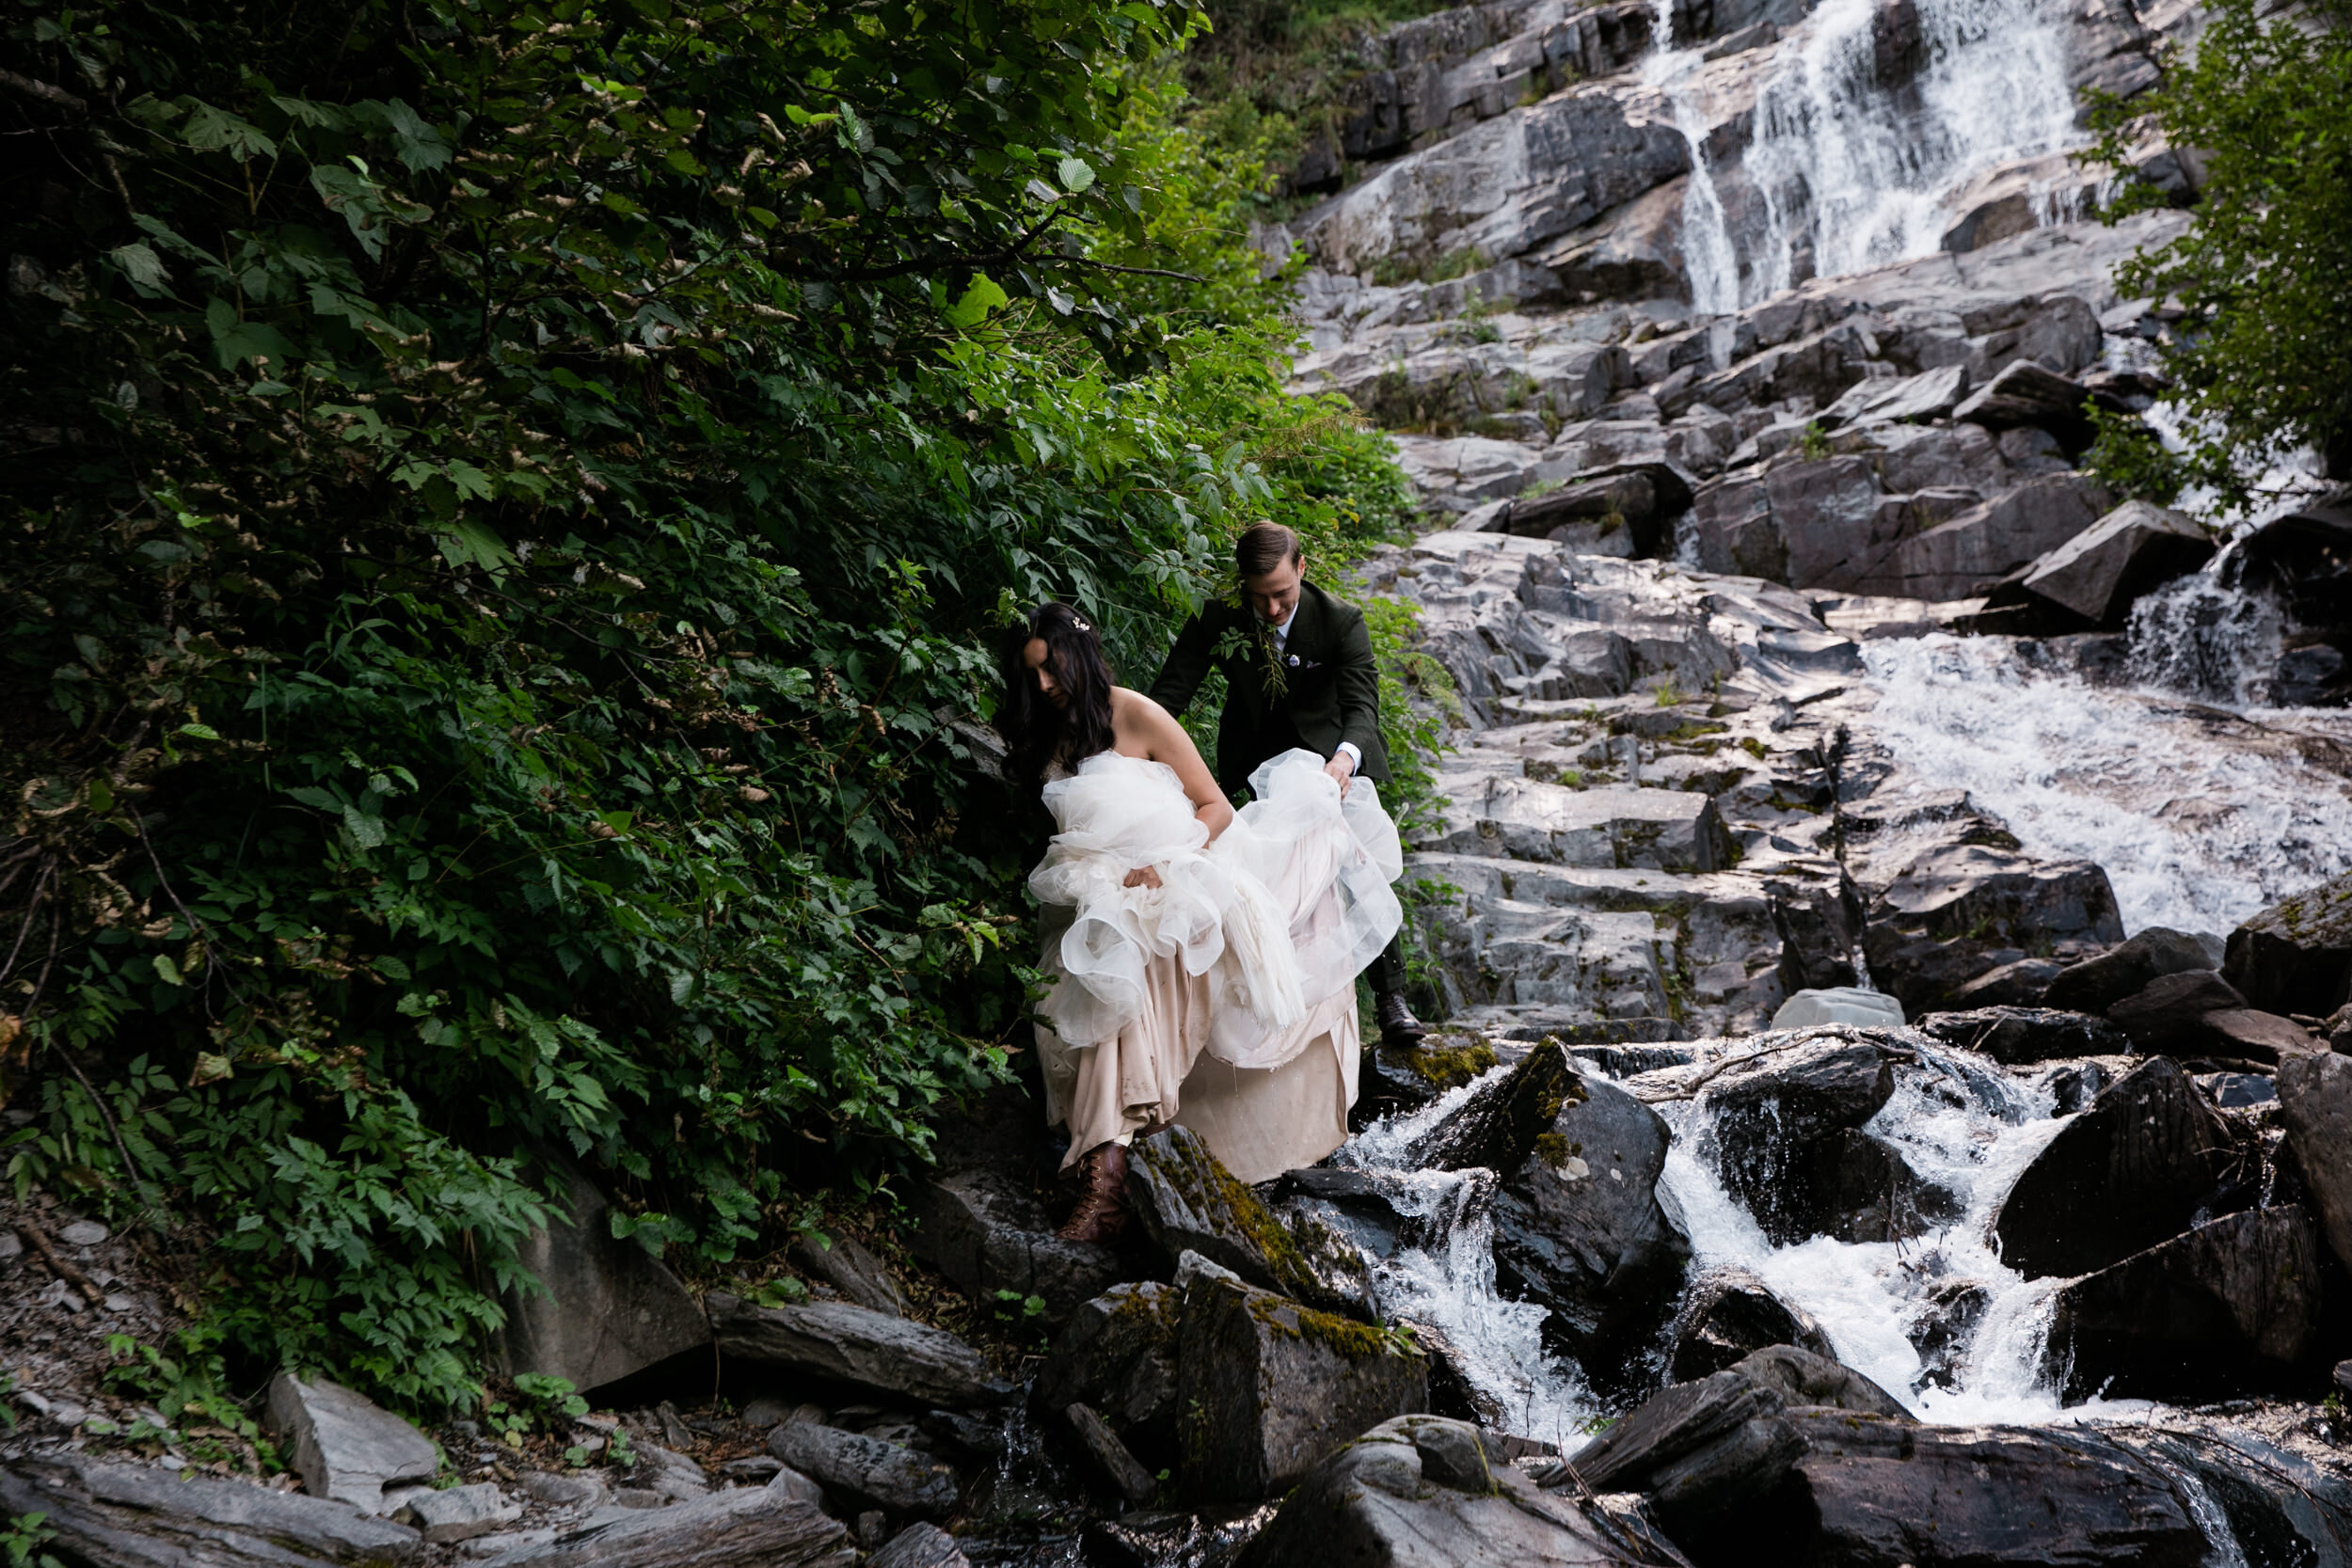 waterfall elopement in alaska | blush colored wedding dress | dark green groom suit | the hearnes adventure photography